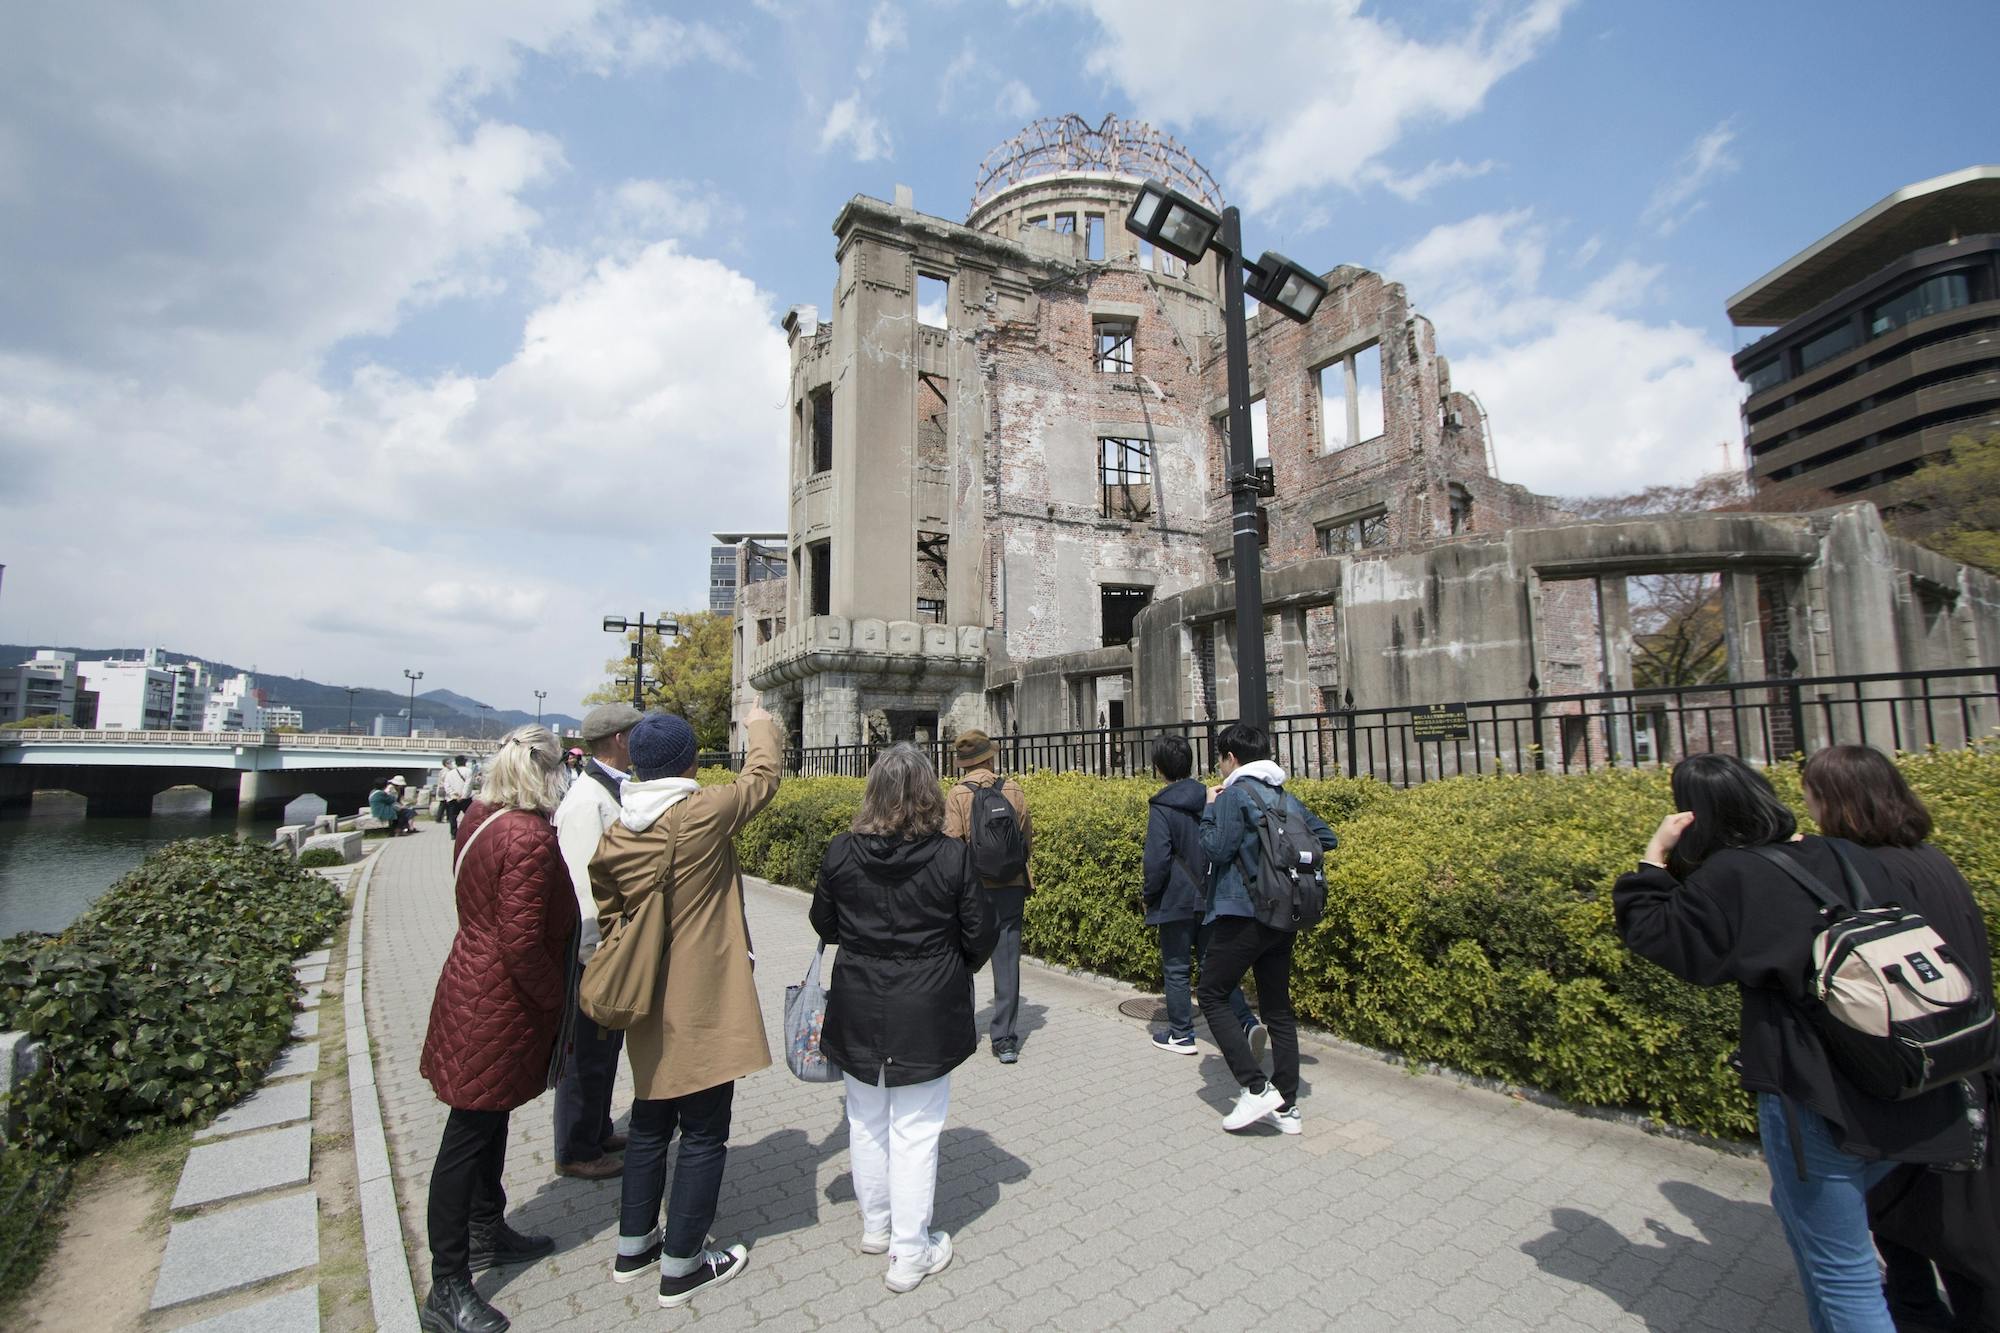 Hiroshima Peace Heiwa walking tour and World Heritage Sites Musement